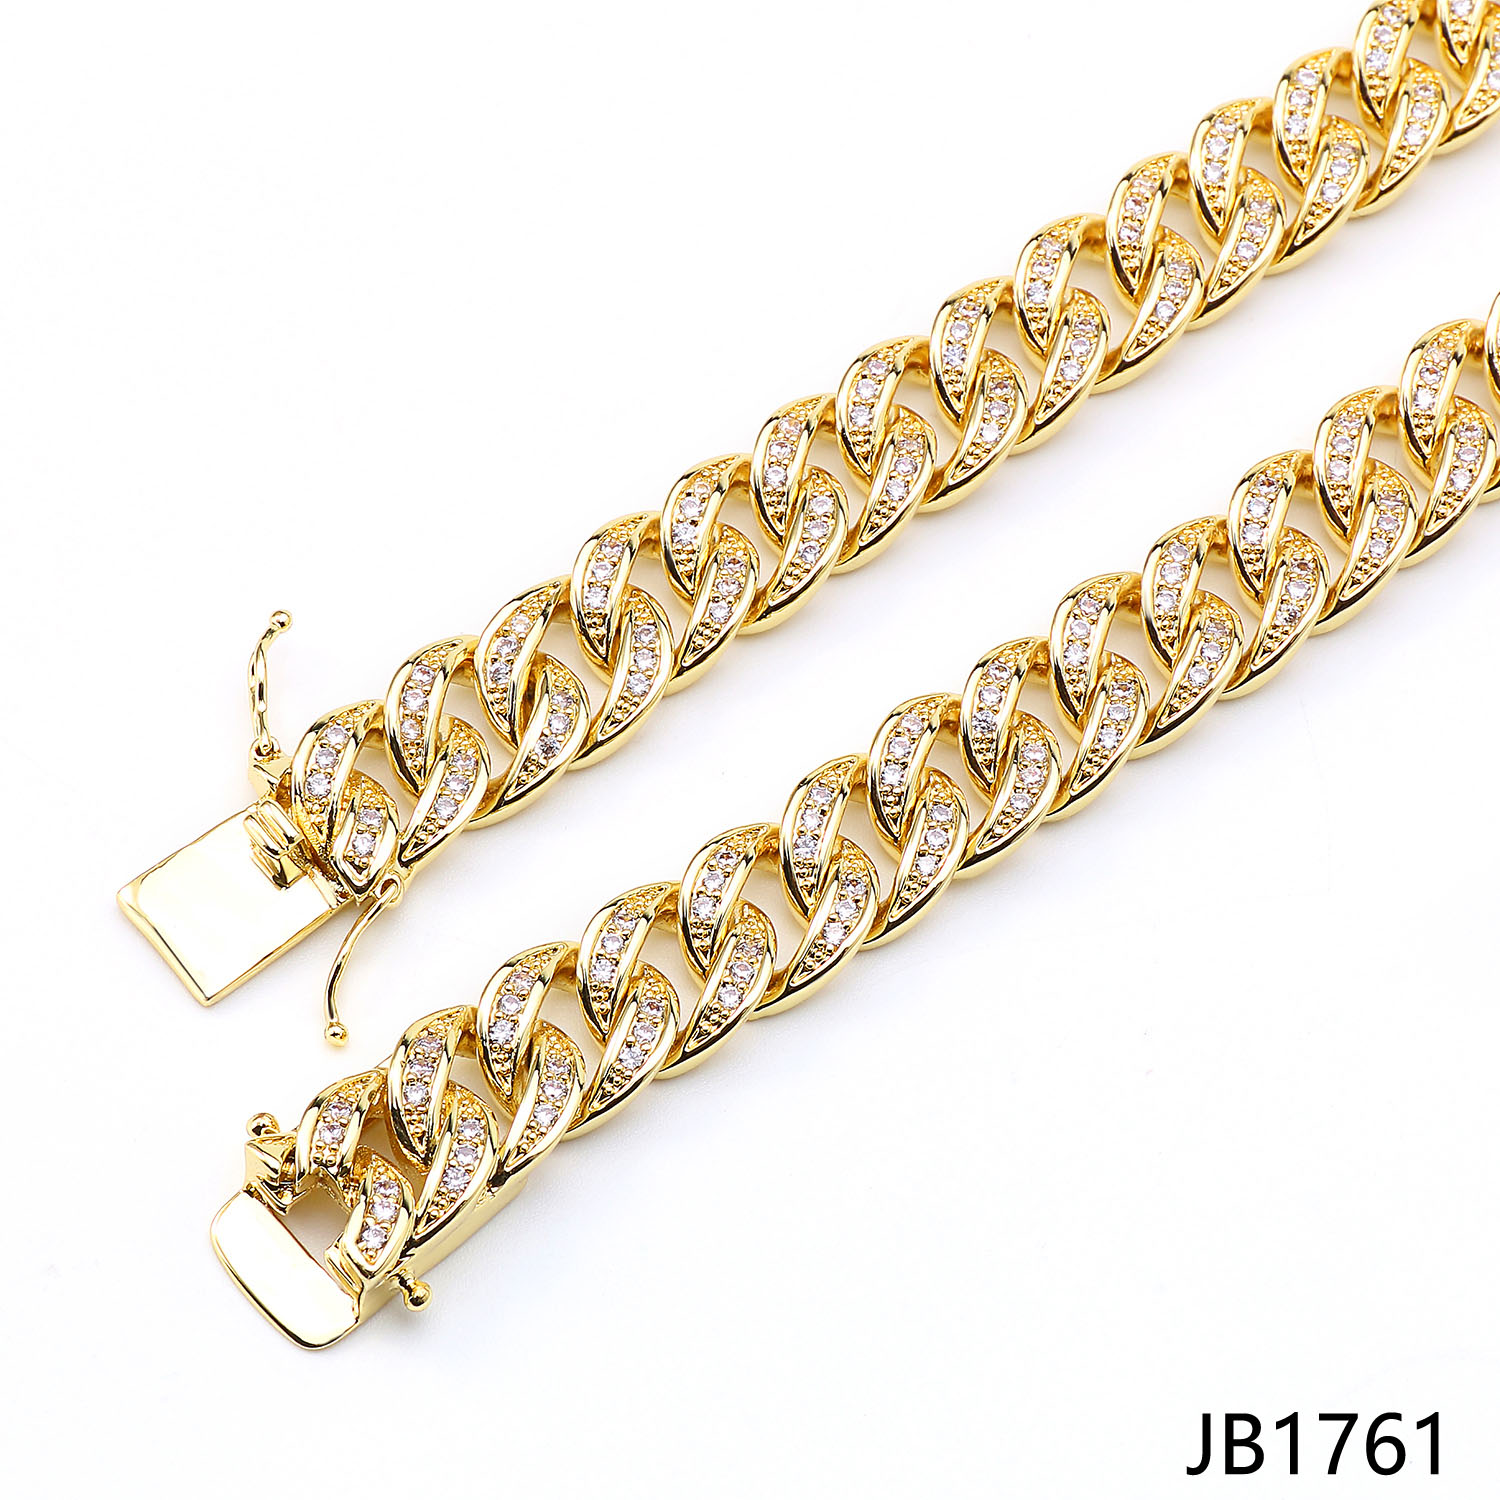 36 Necklace Bracelet 9 24 30 16 18 Shiny Jewelers USA Mens Iced Out Hip Hop Black CZ Miami Cuban Link Chain 8 20